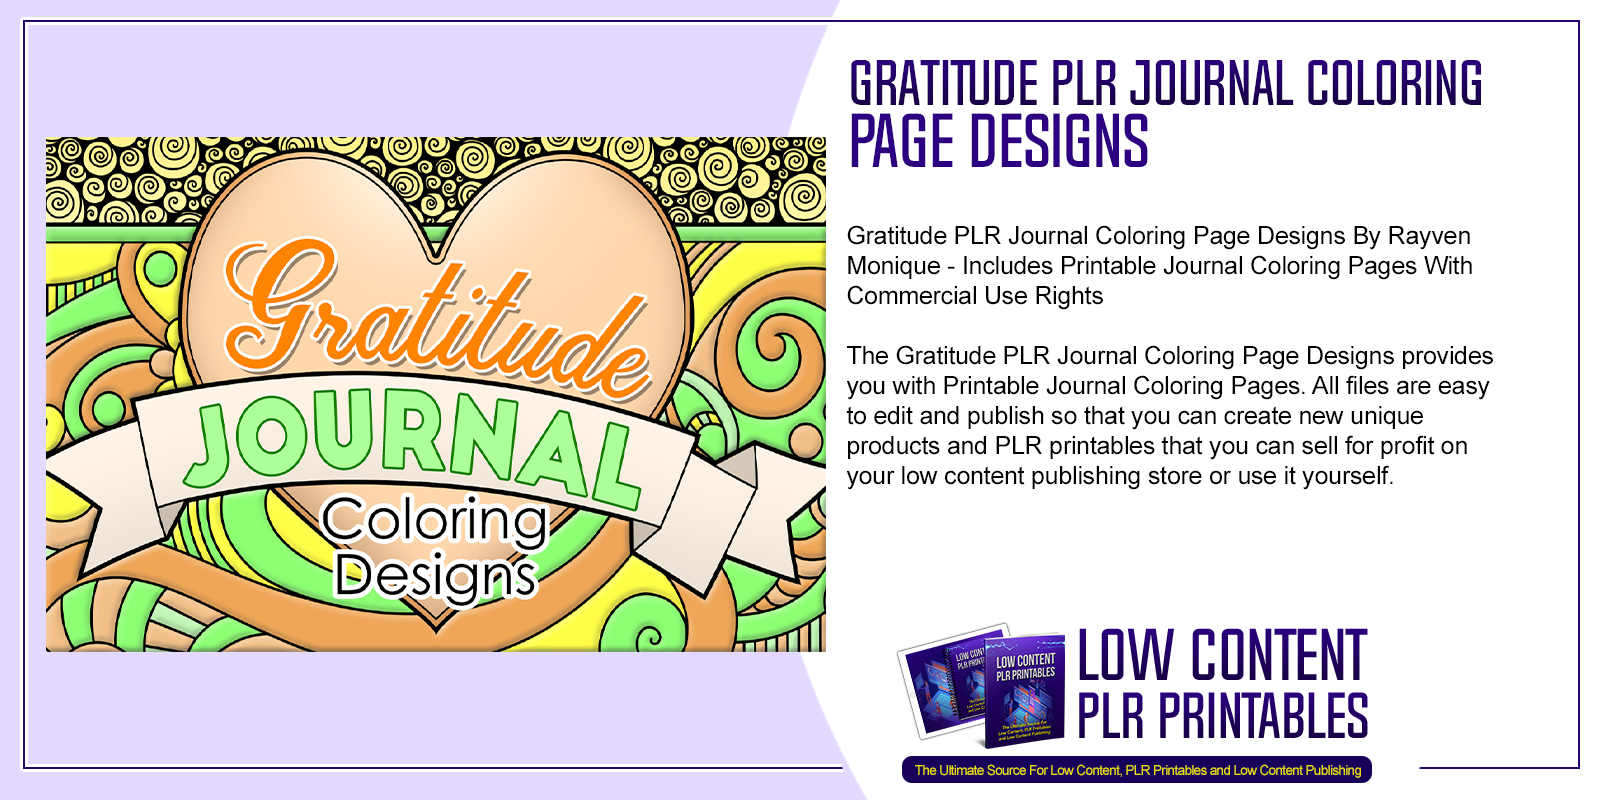 Gratitude PLR Journal Coloring Page Designs 2